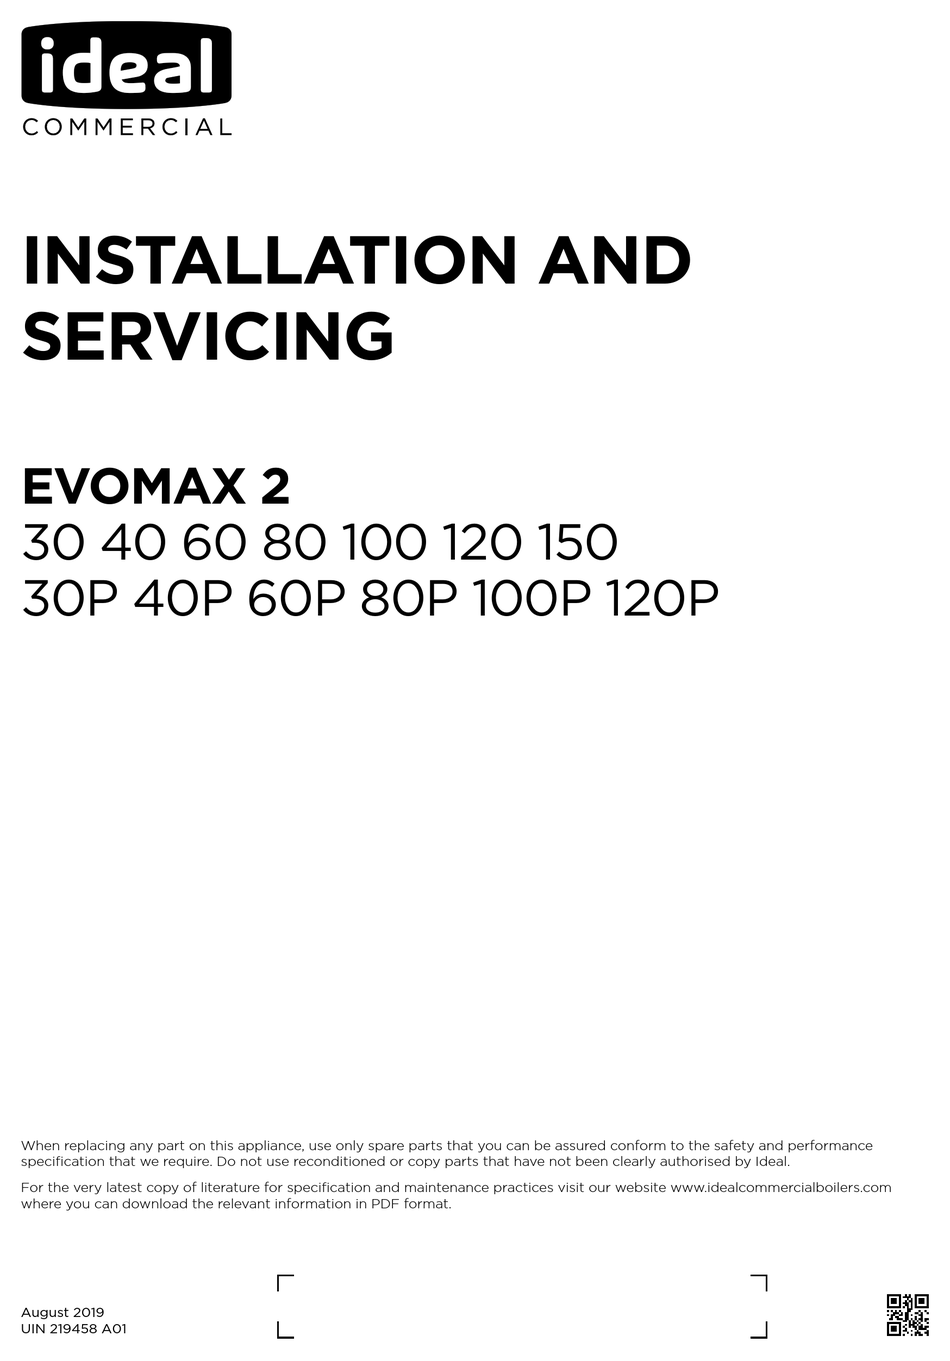 IDEAL EVOMAX 2 30 INSTALLATION AND SERVICING Pdf Download | ManualsLib  Ideal Evomax 2 Wiring Diagram    ManualsLib